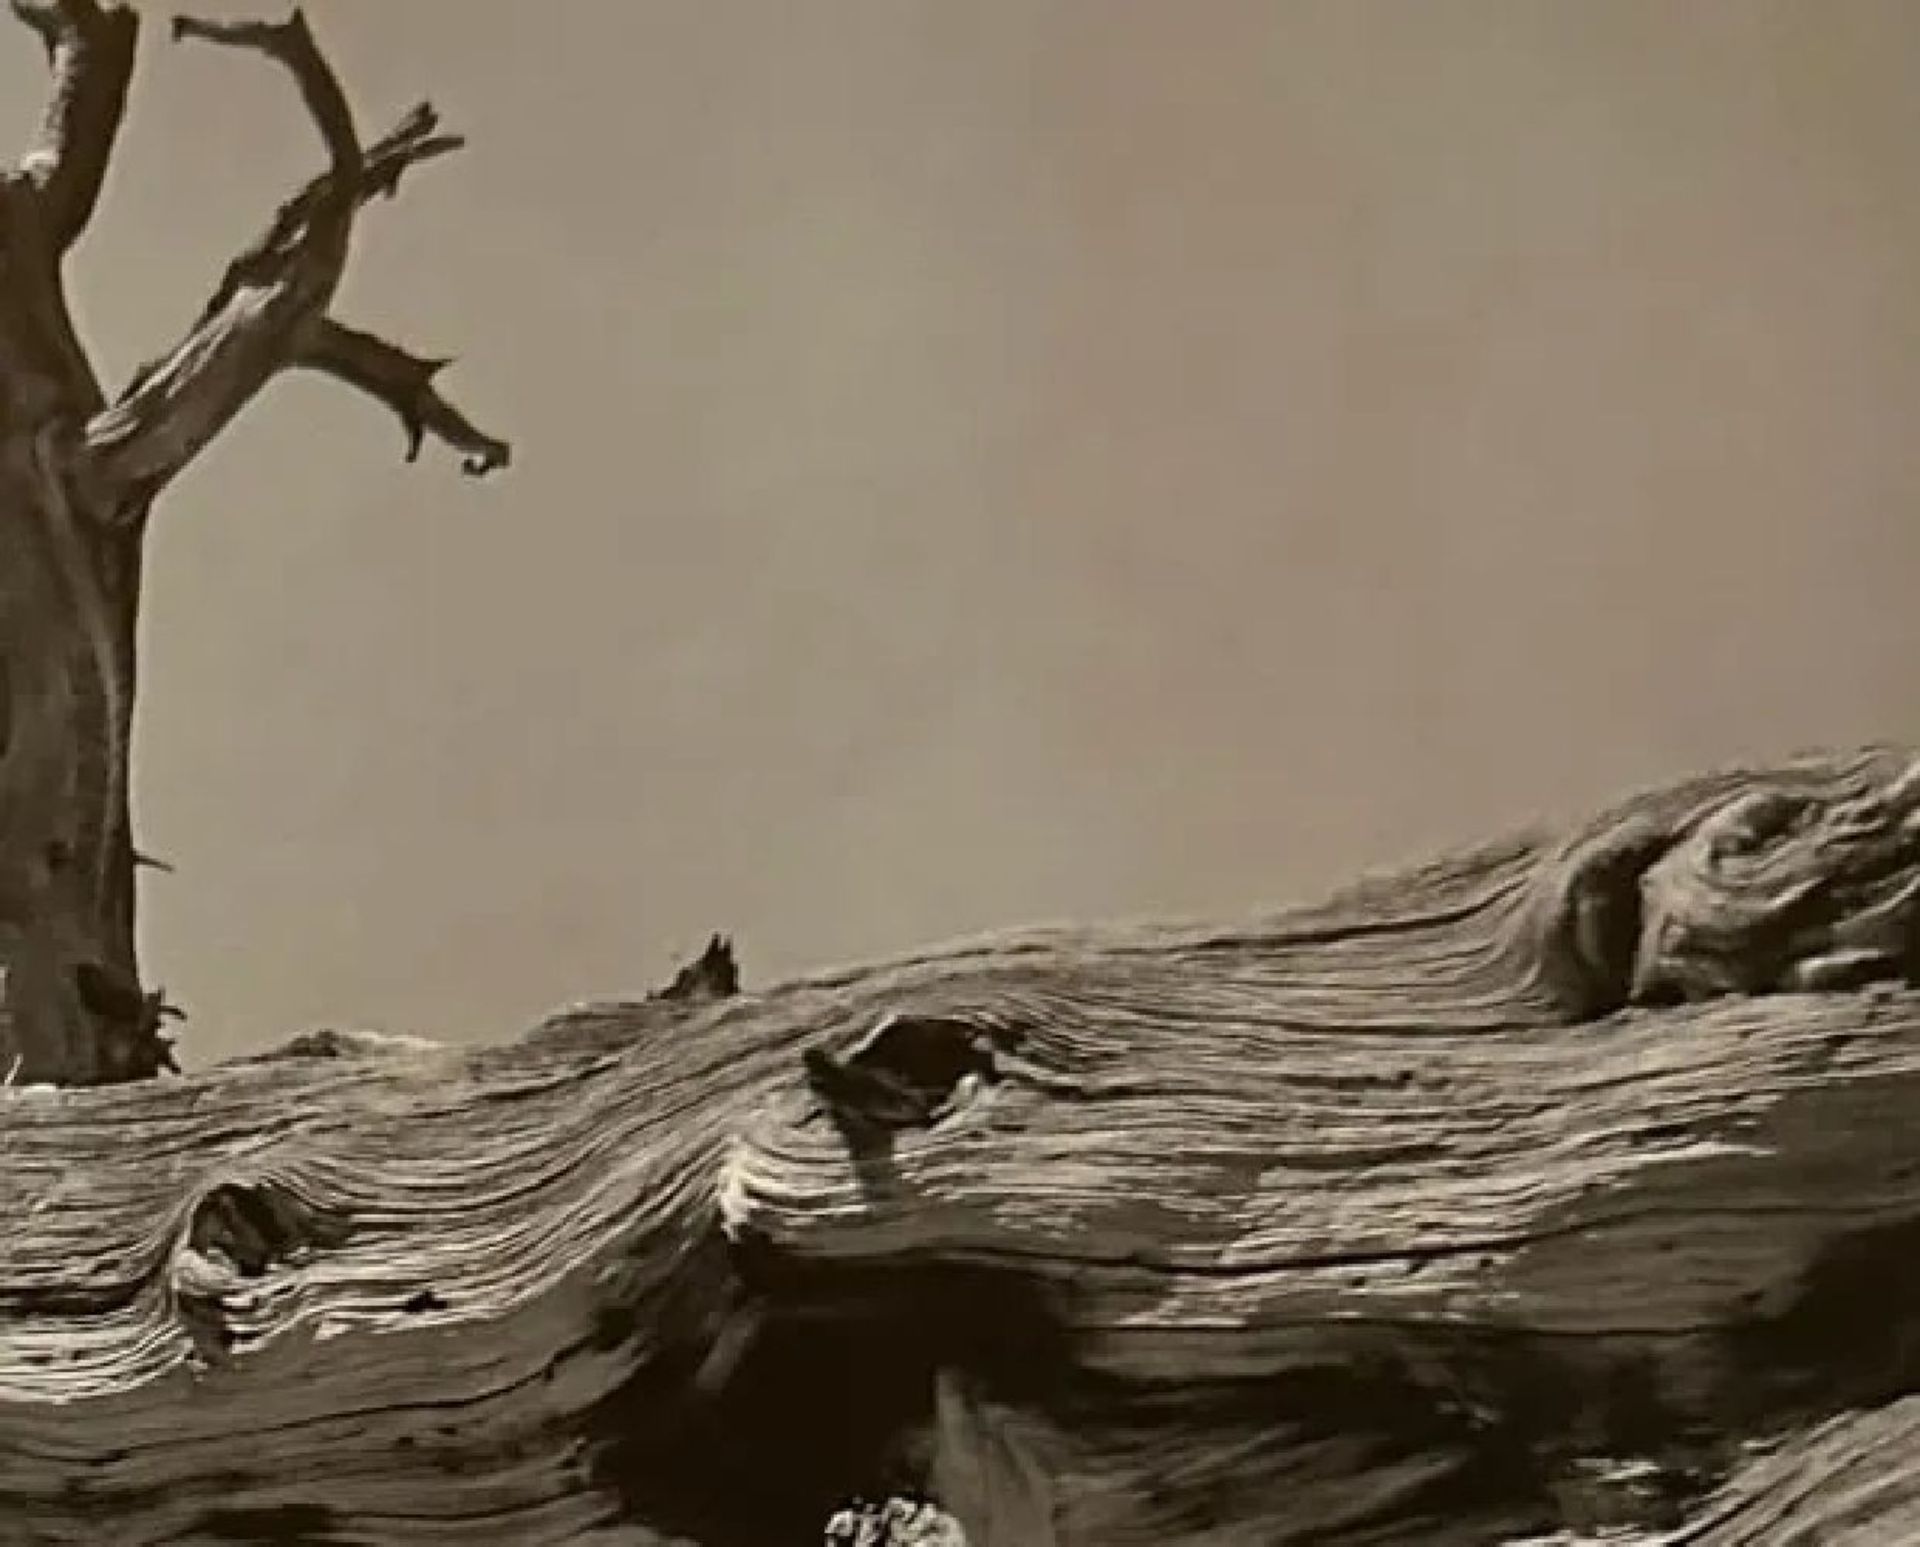 Ansel Adams "Fallen Tree" Print - Image 3 of 6